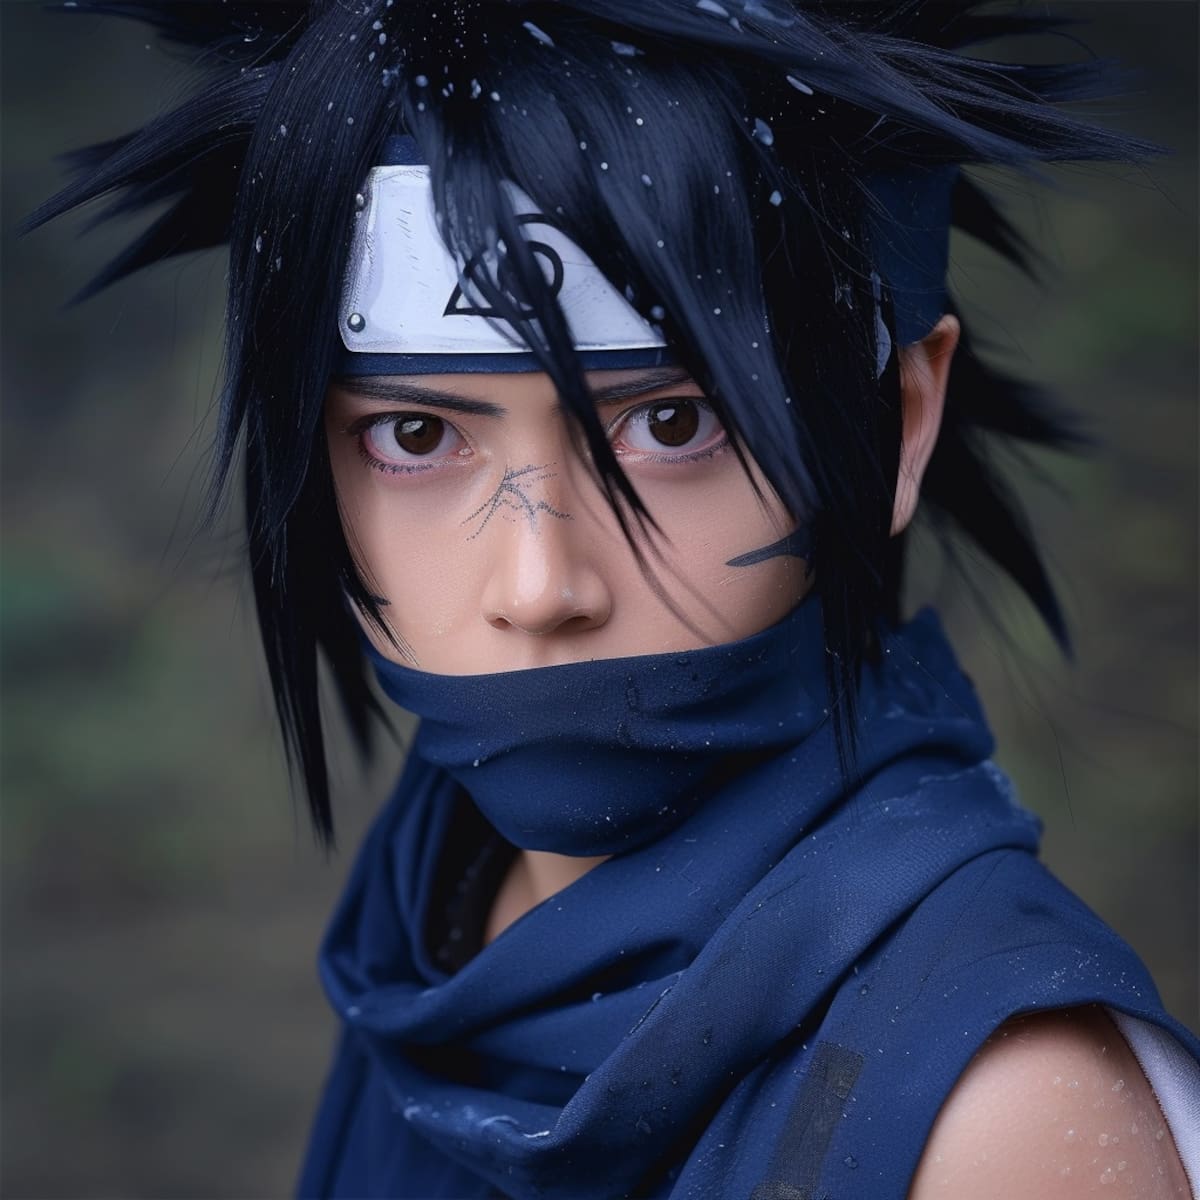 Sasuke de Naruto en la vida real según la Inteligencia Artificial